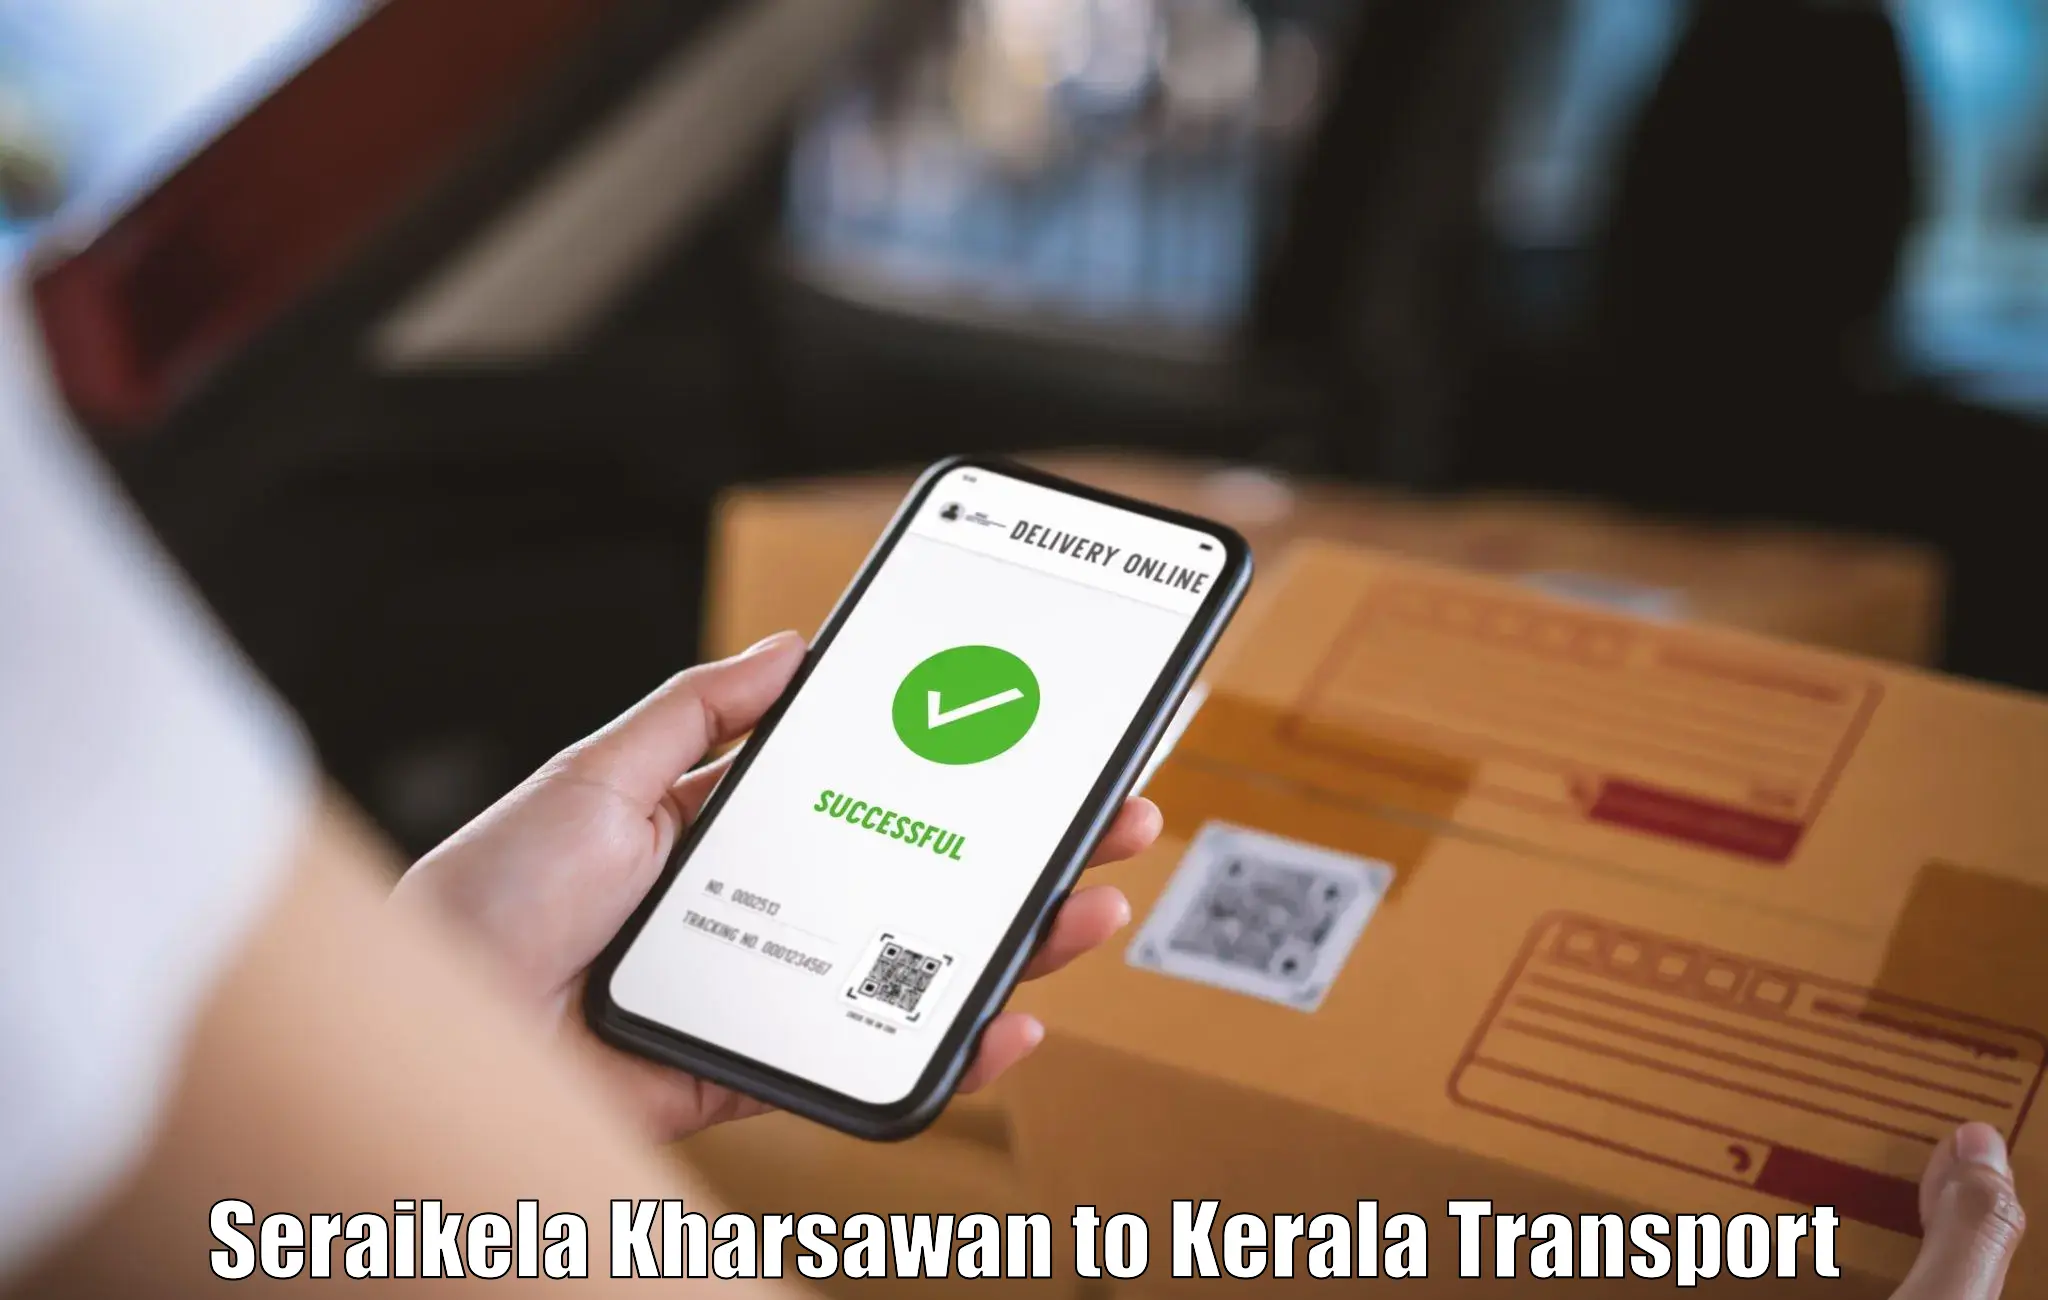 All India transport service Seraikela Kharsawan to Thamarassery